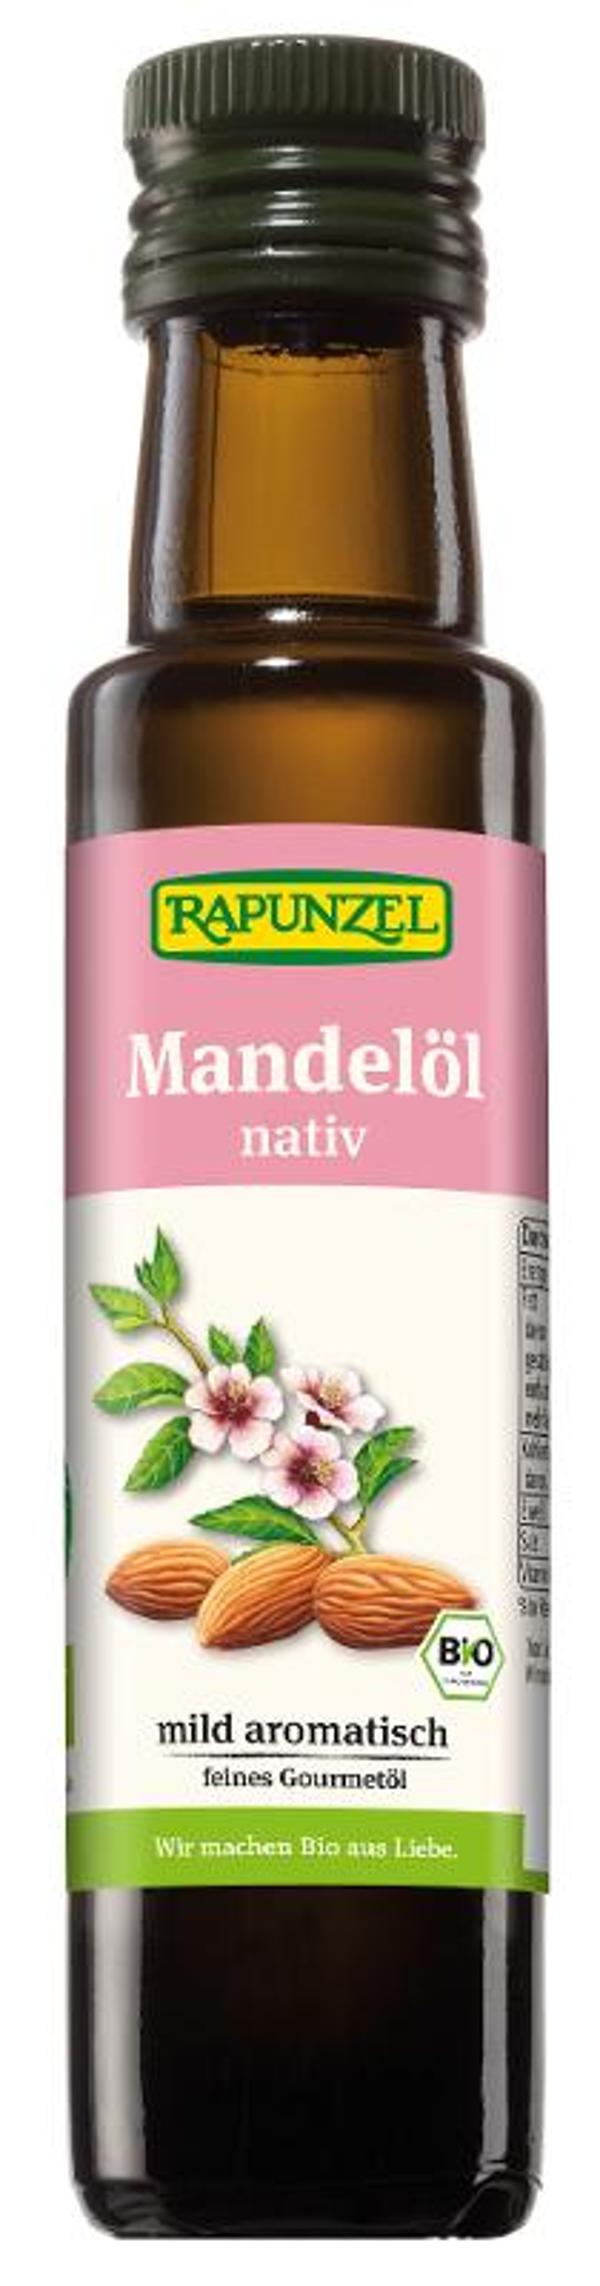 Produktfoto zu Mandelöl" nativ" kaltgepresst